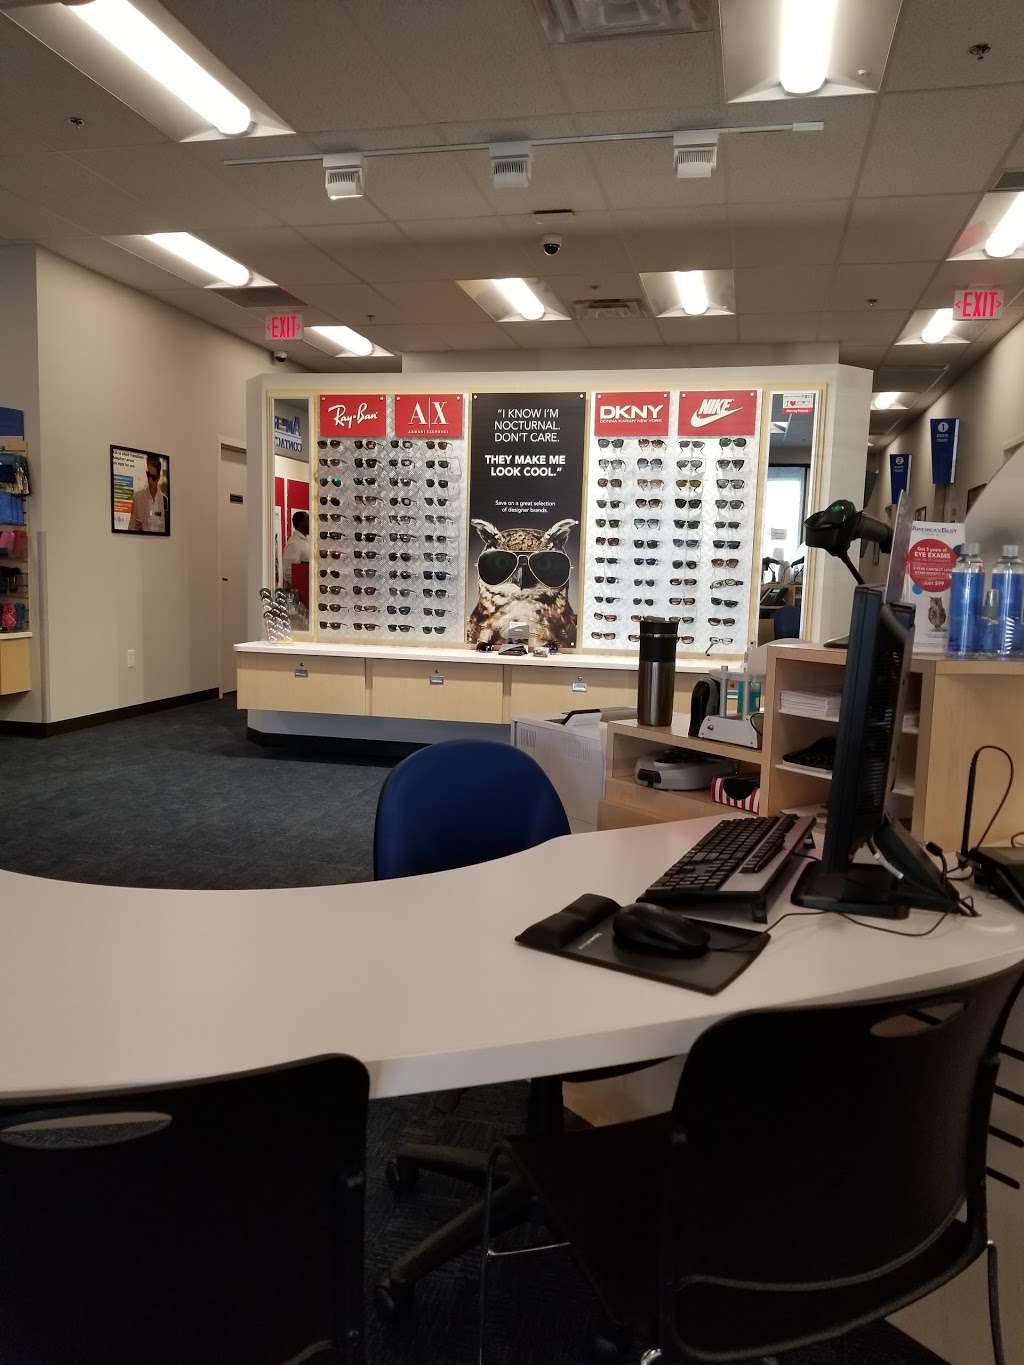 Americas Best Contacts & Eyeglasses | 9140 Whittier Blvd, Pico Rivera, CA 90660, USA | Phone: (562) 551-3050